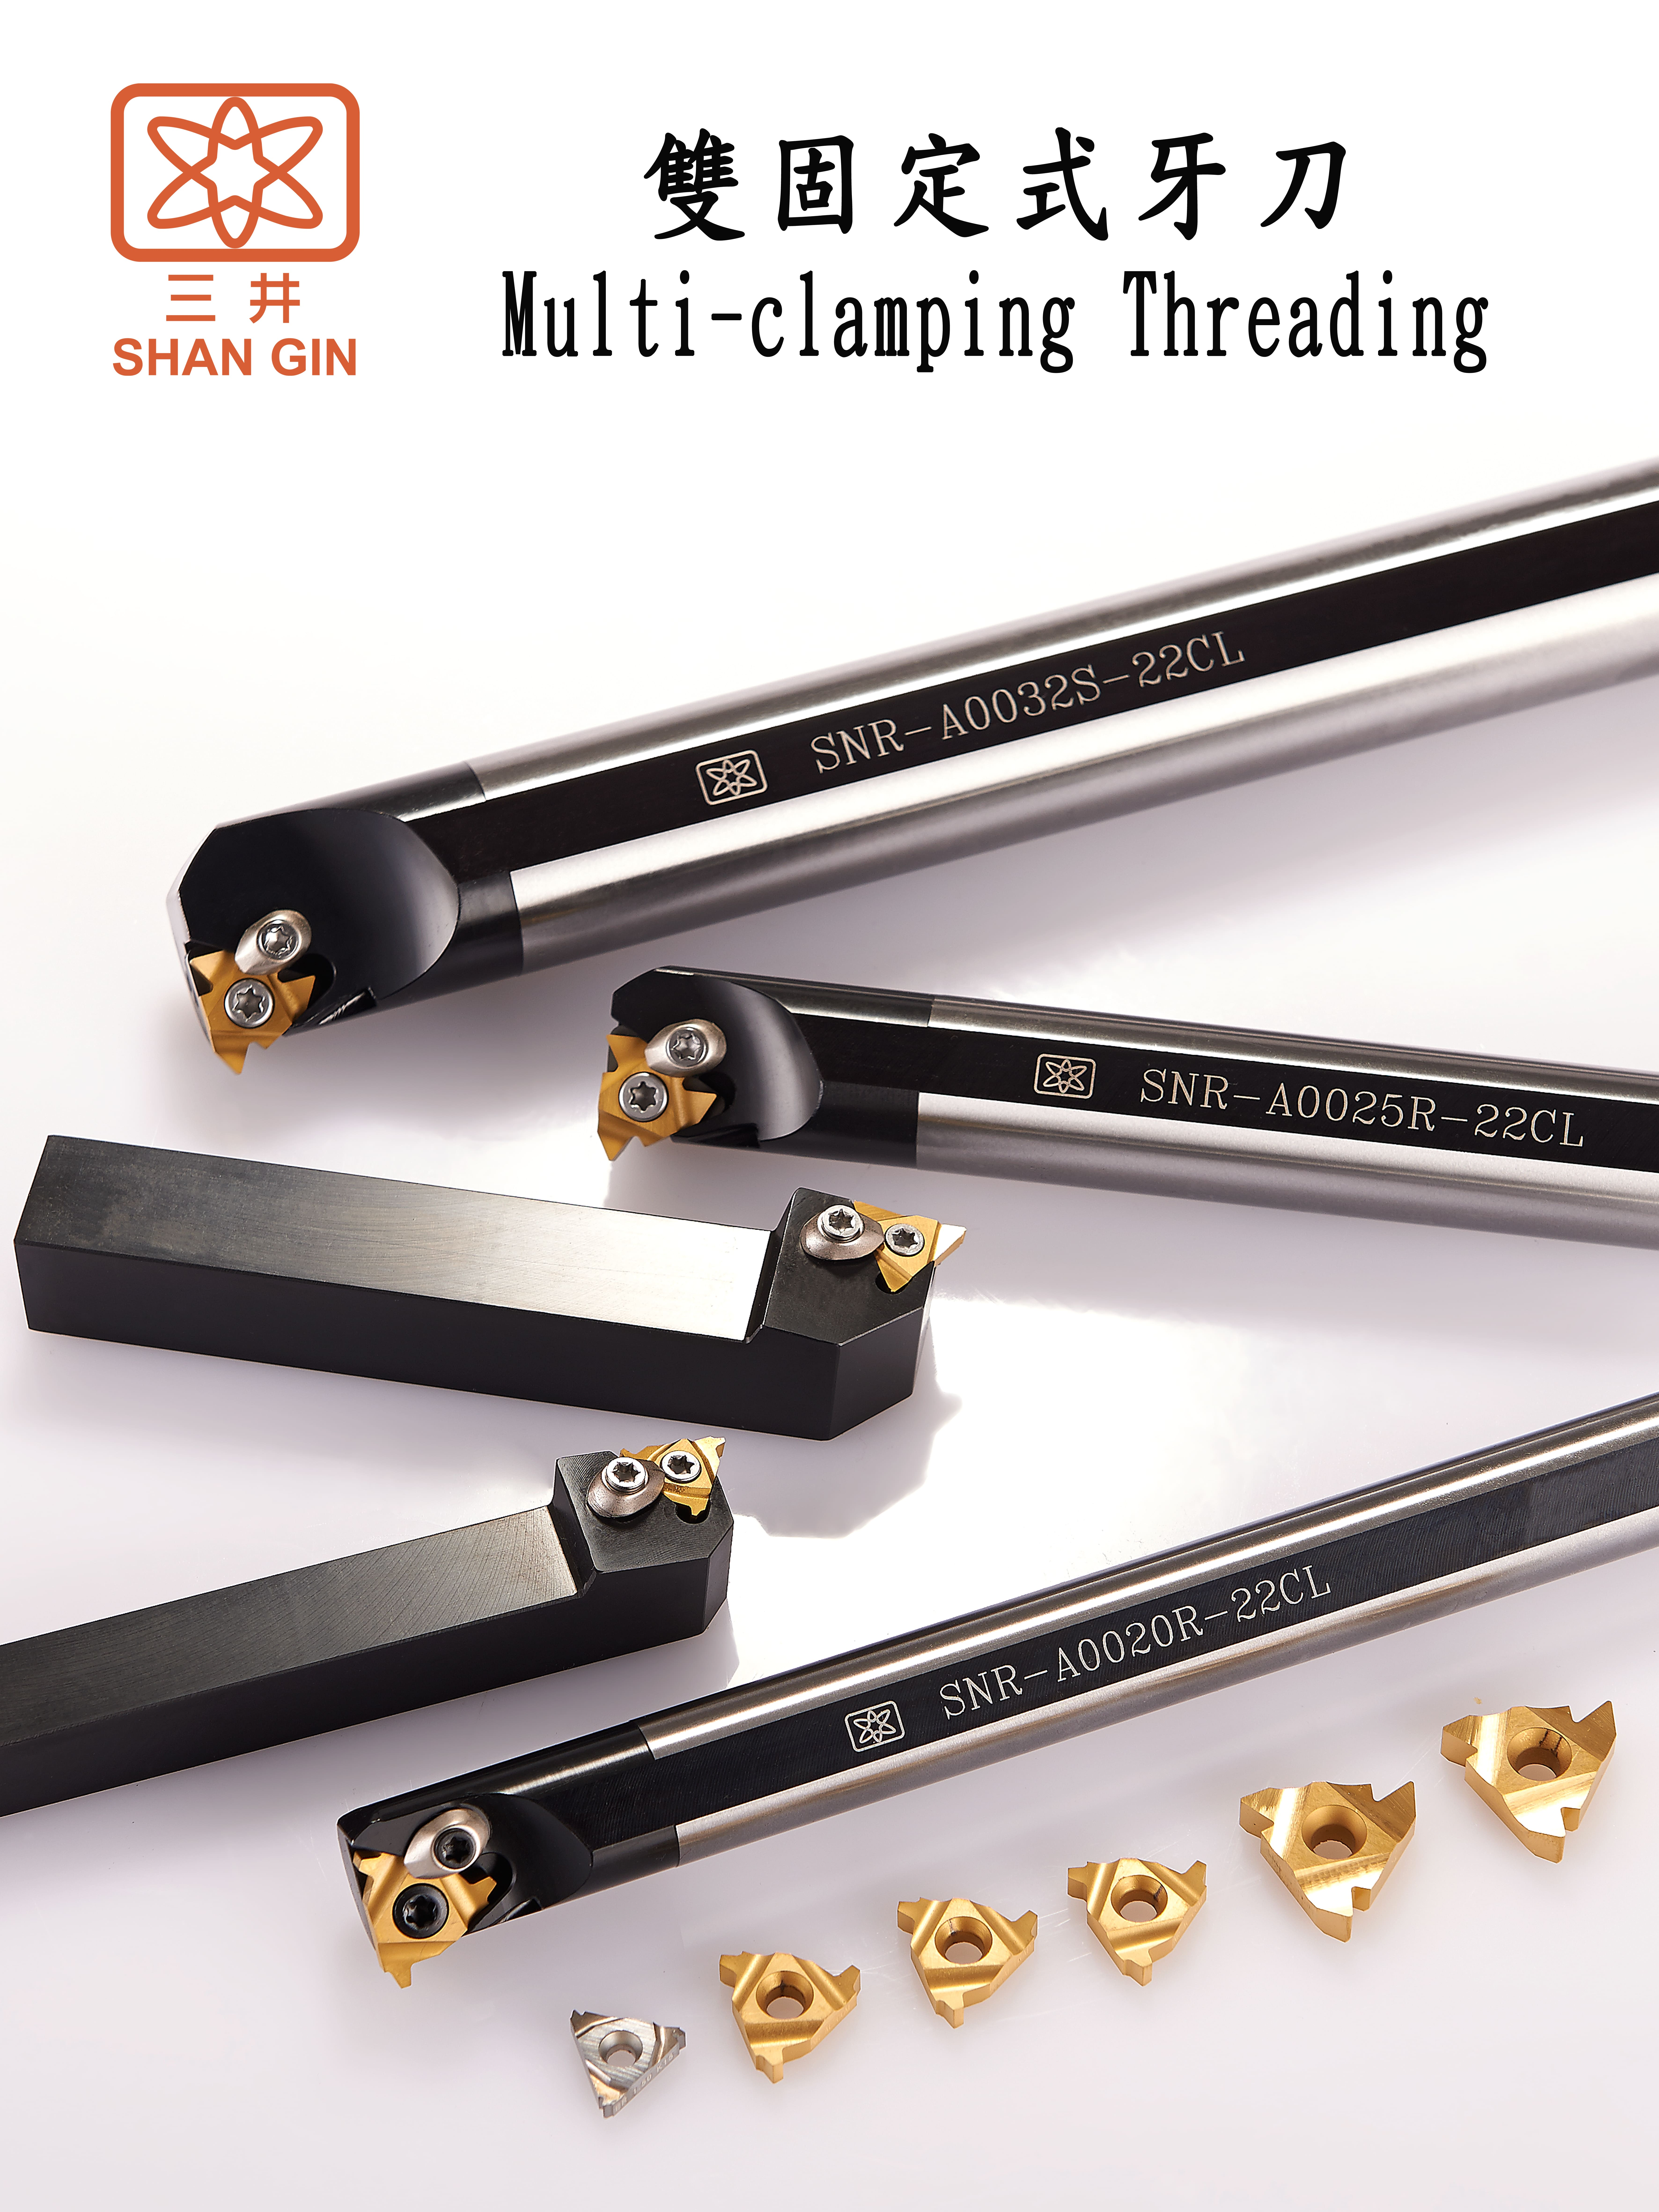 Catalog|Multi-clamping Threading